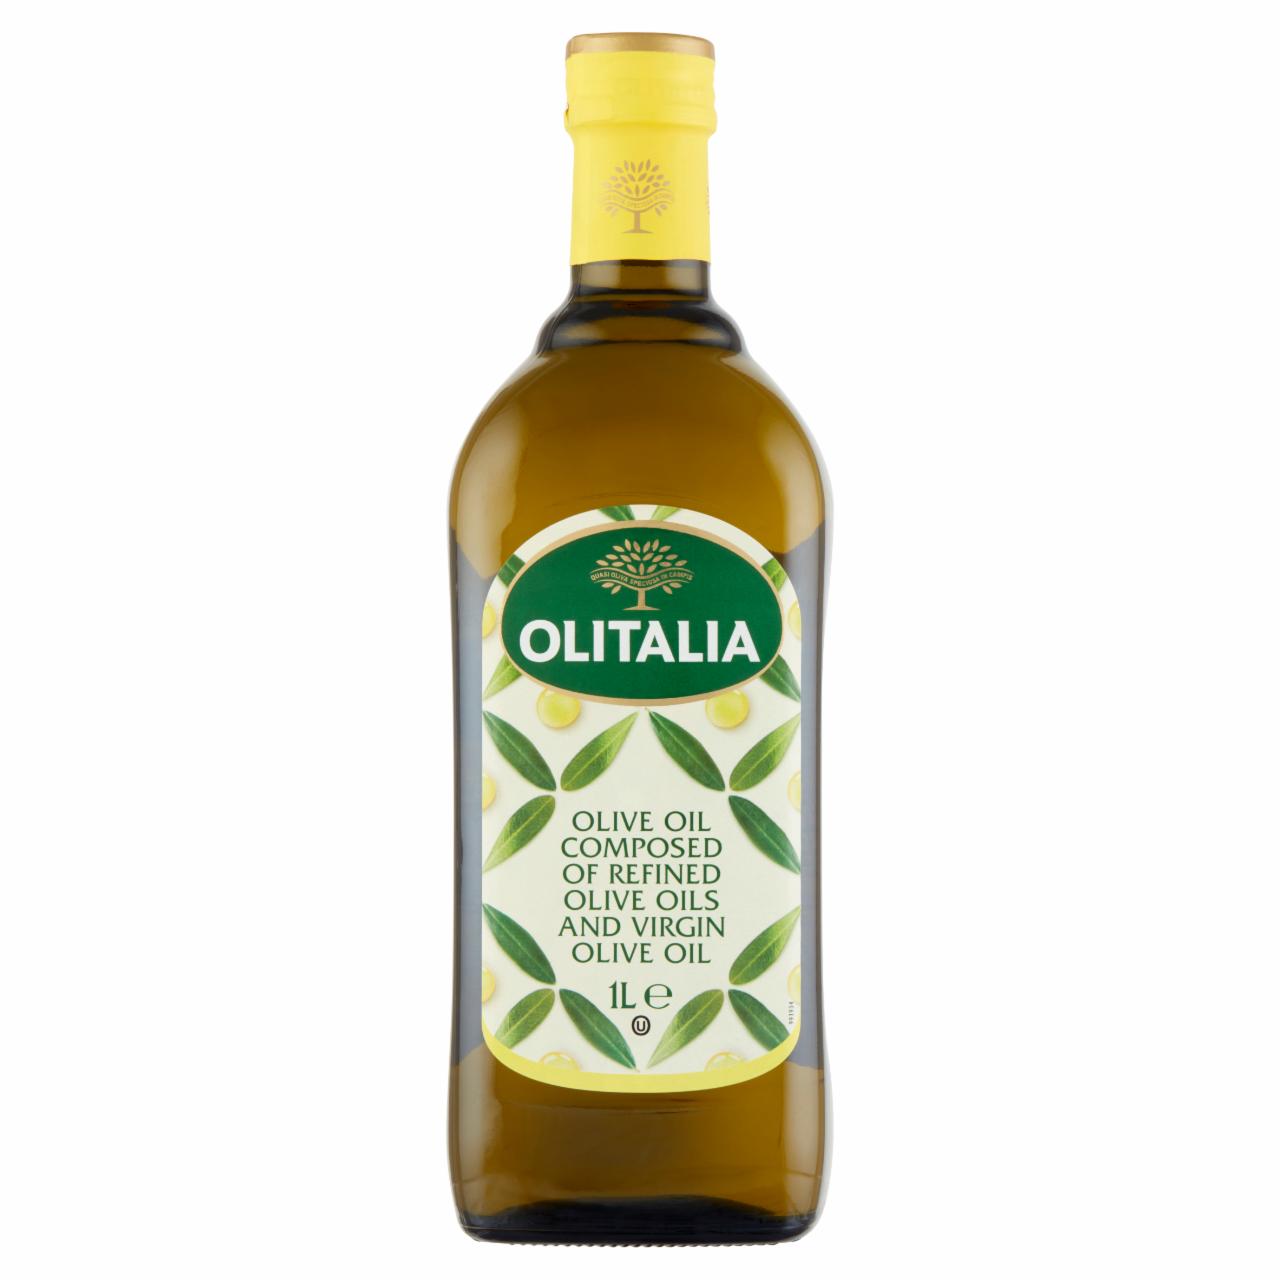 Képek - Olitalia olívaolaj 1 l